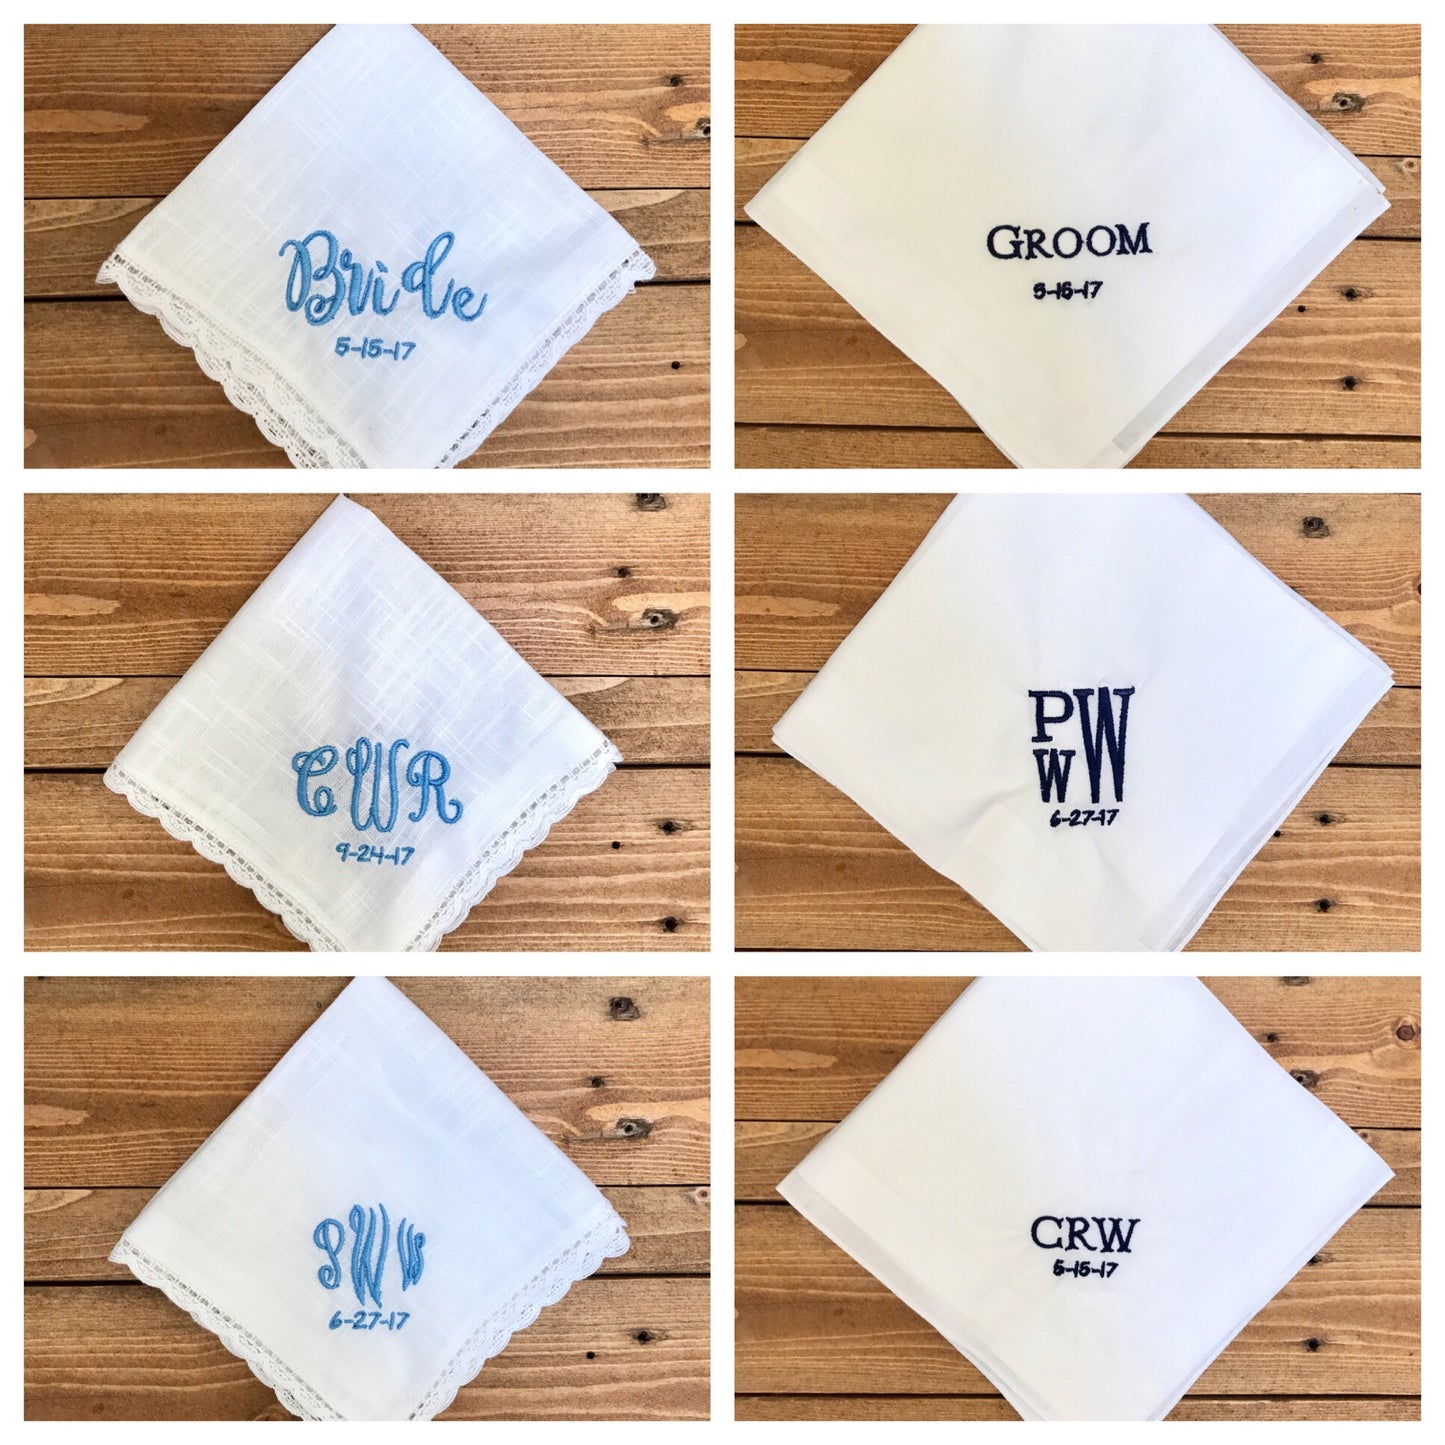 Personalized Handkerchiefs - Great Wedding Gift - Words or Monogram on Hanky